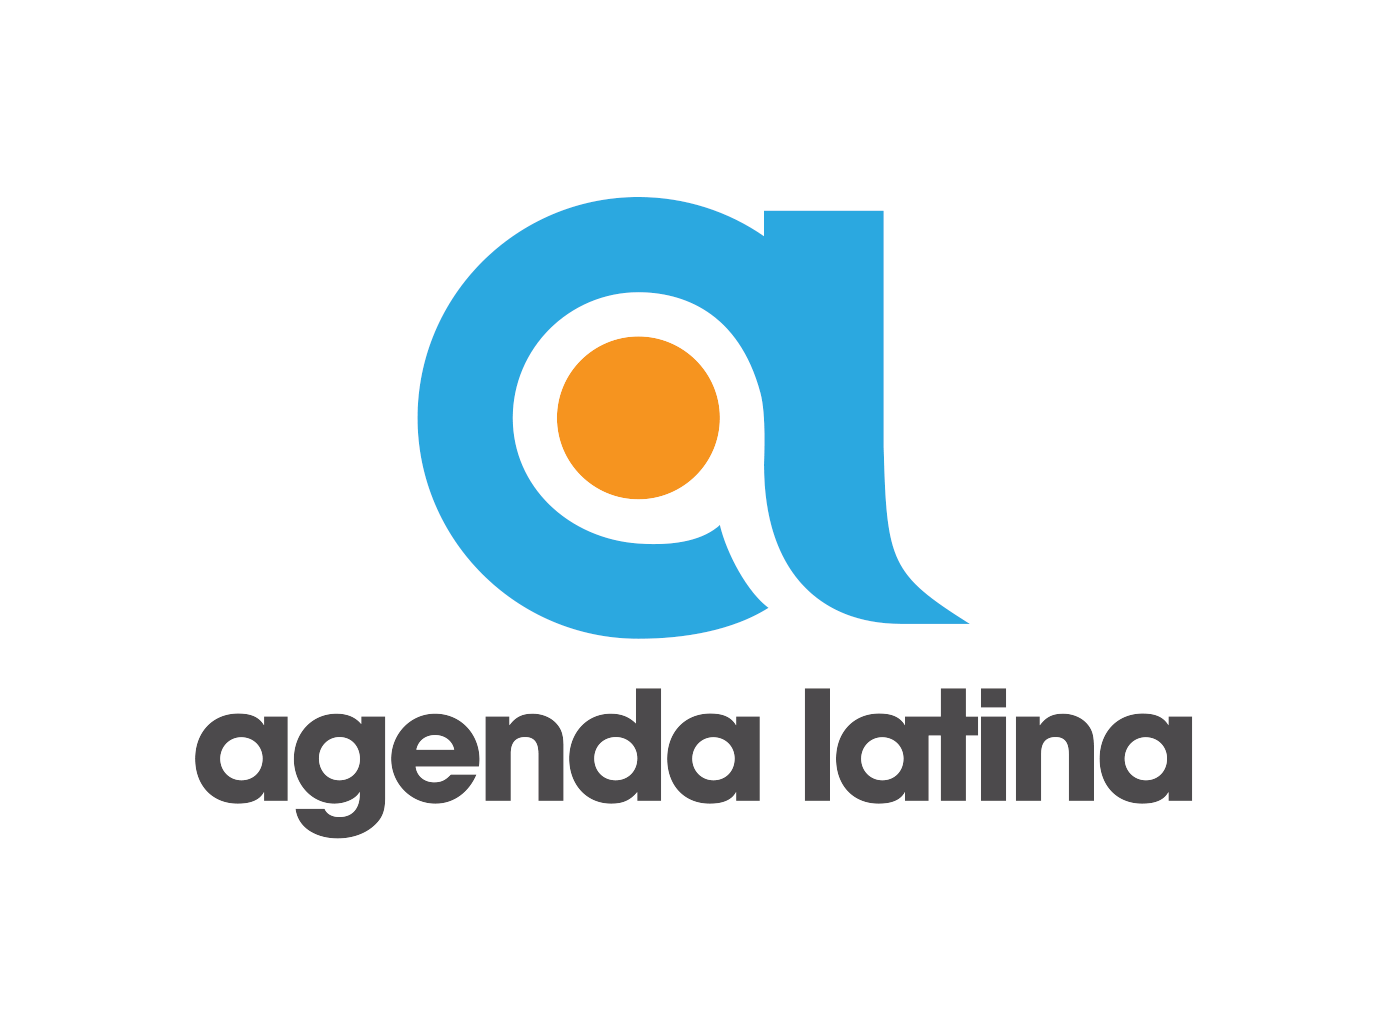 agenda latina logo